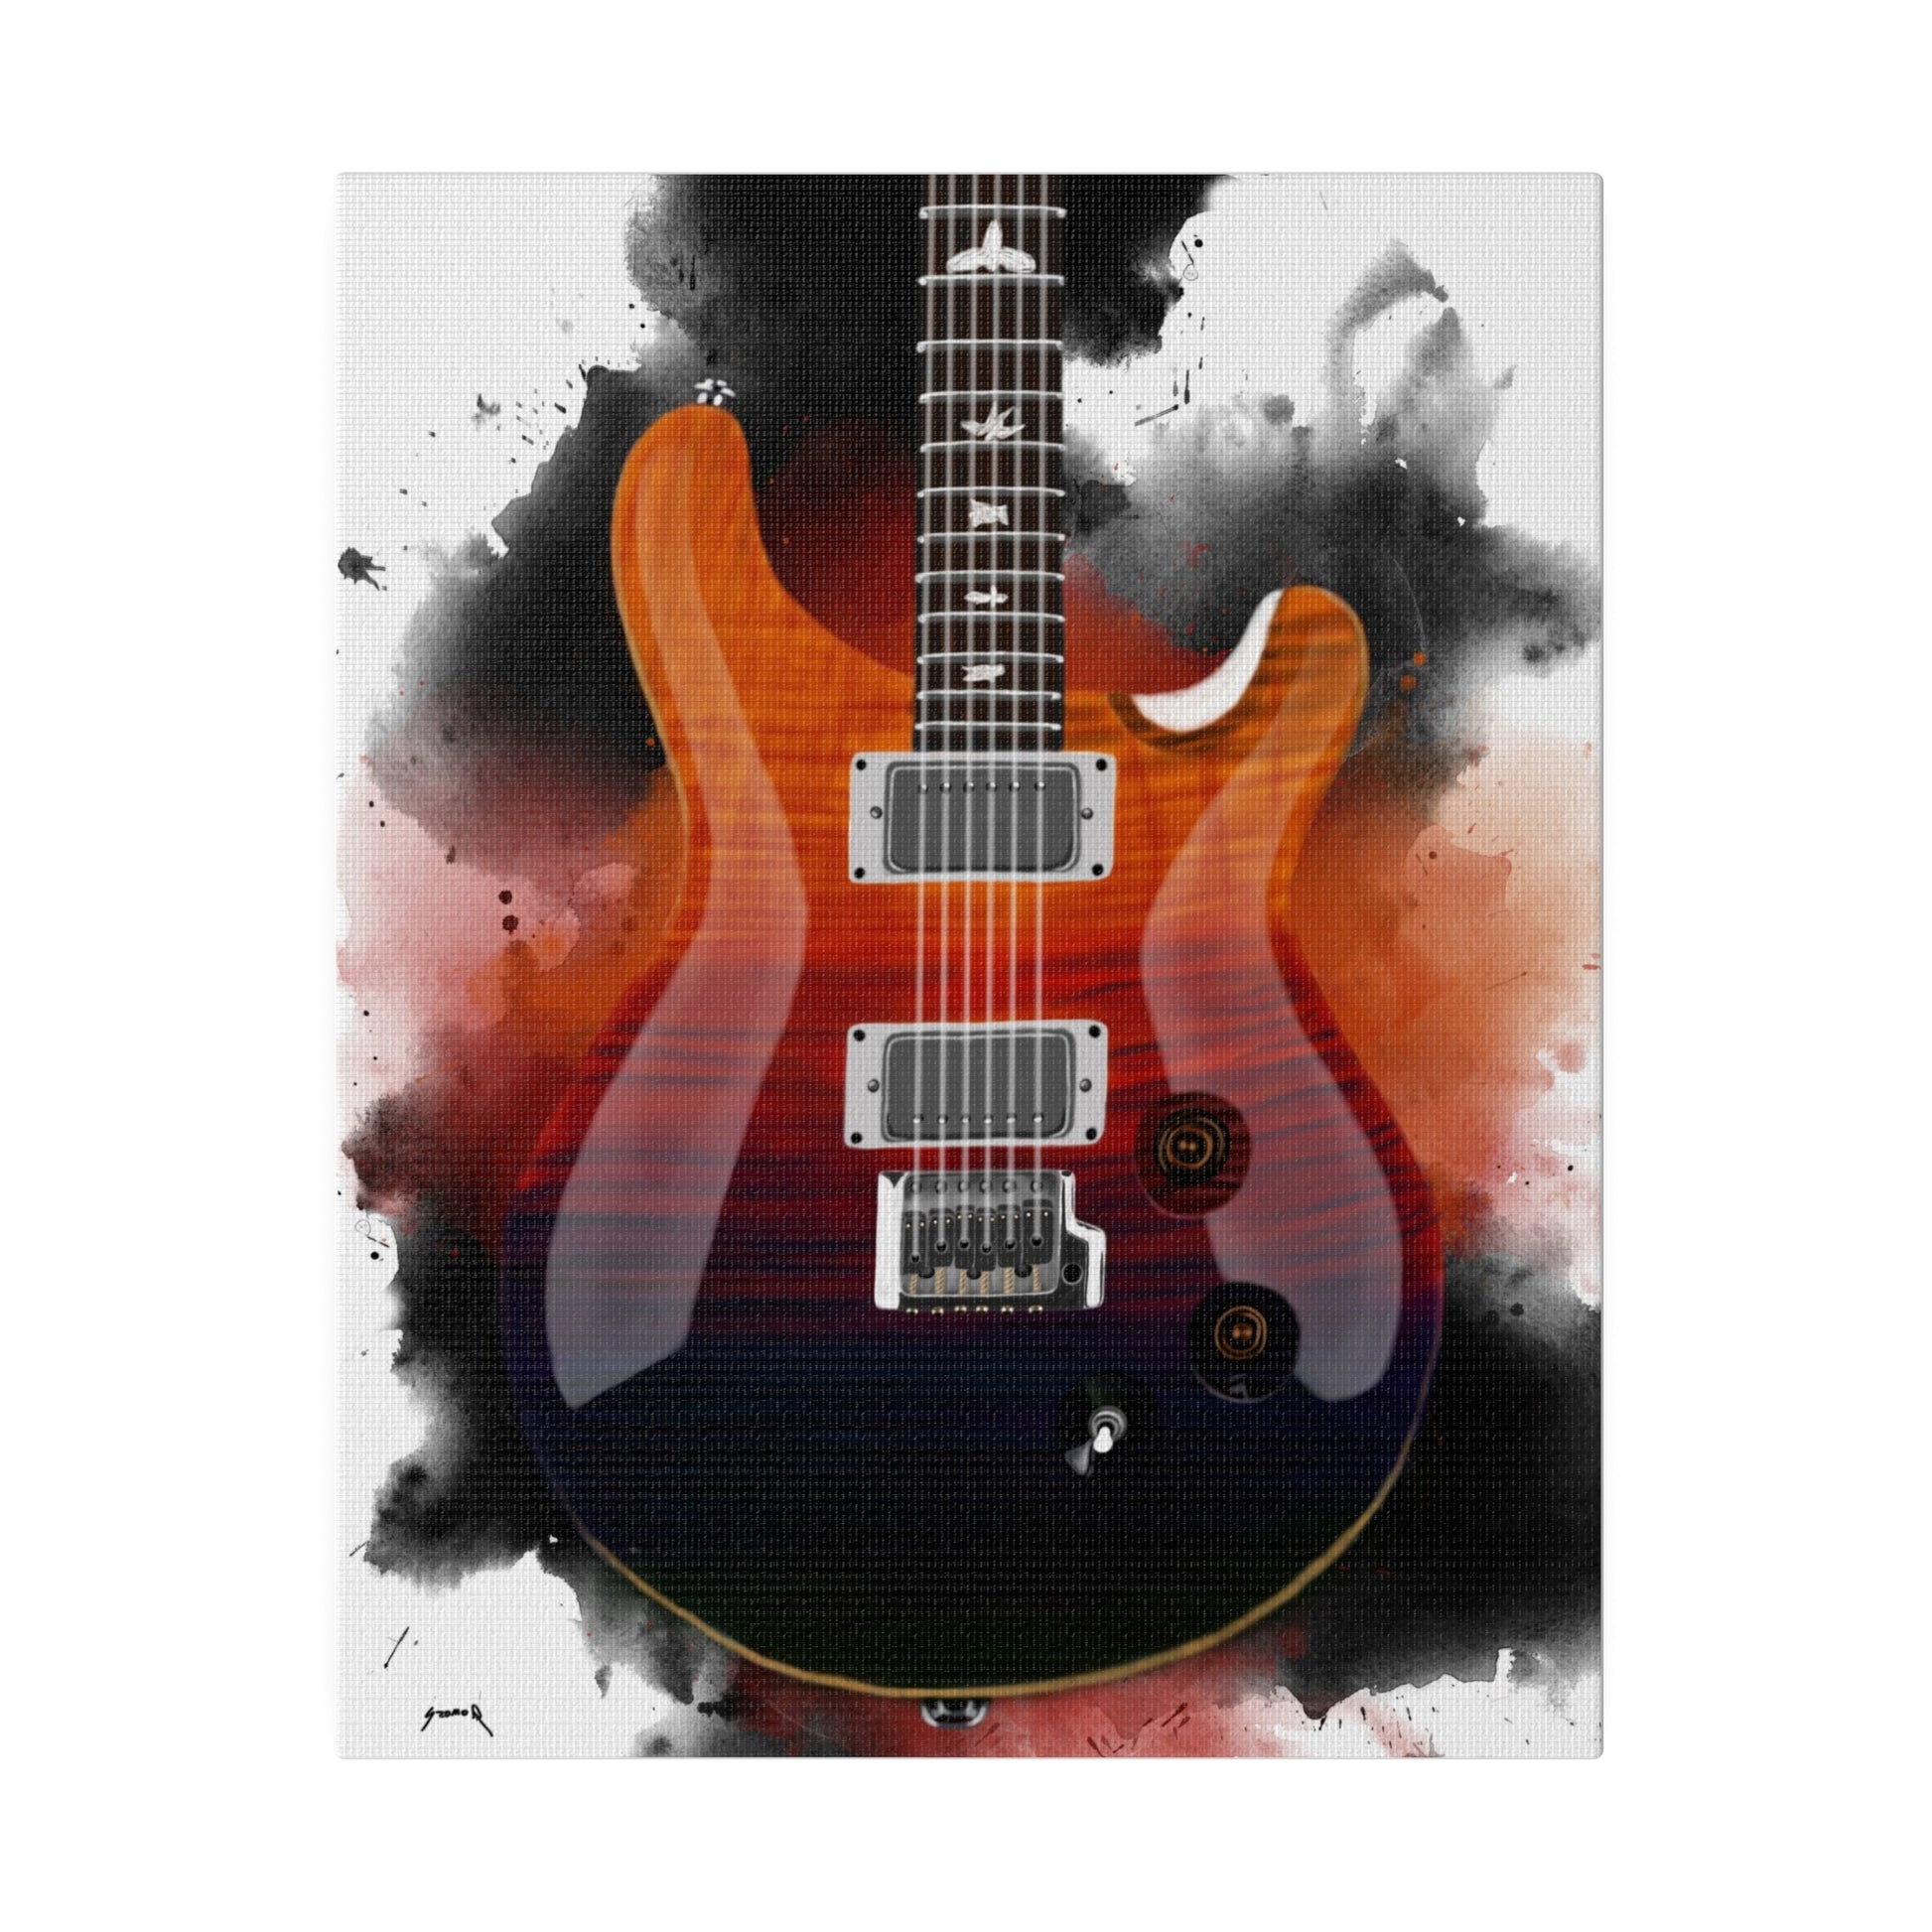 Digital painting of Al's guitar printed on canvas